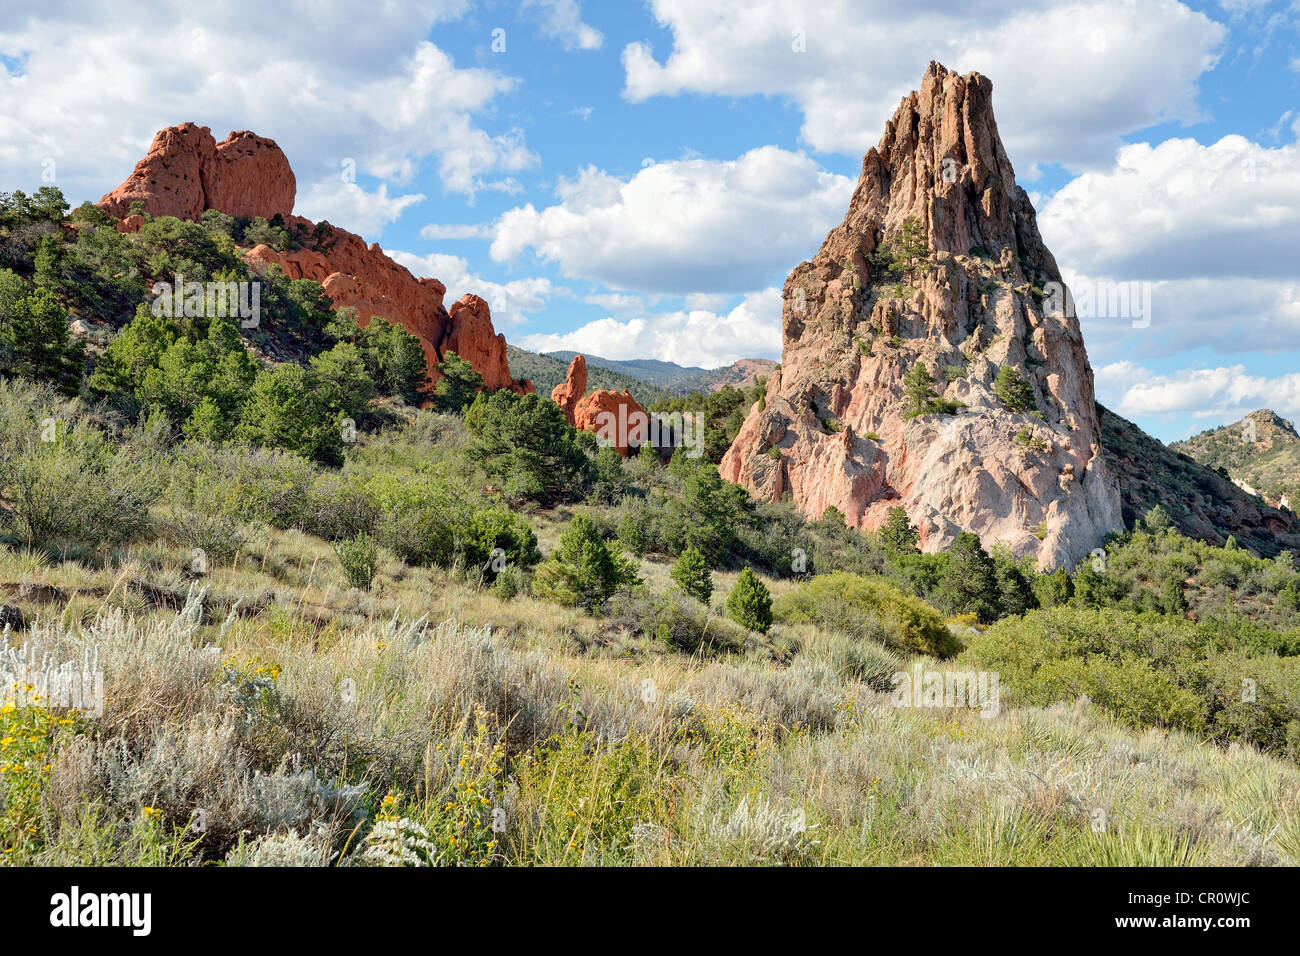 Grau-Rock oder Cathedral Rock, Garten der Götter, rote Sandsteinfelsen, Colorado Springs, Colorado, USA Stockfoto